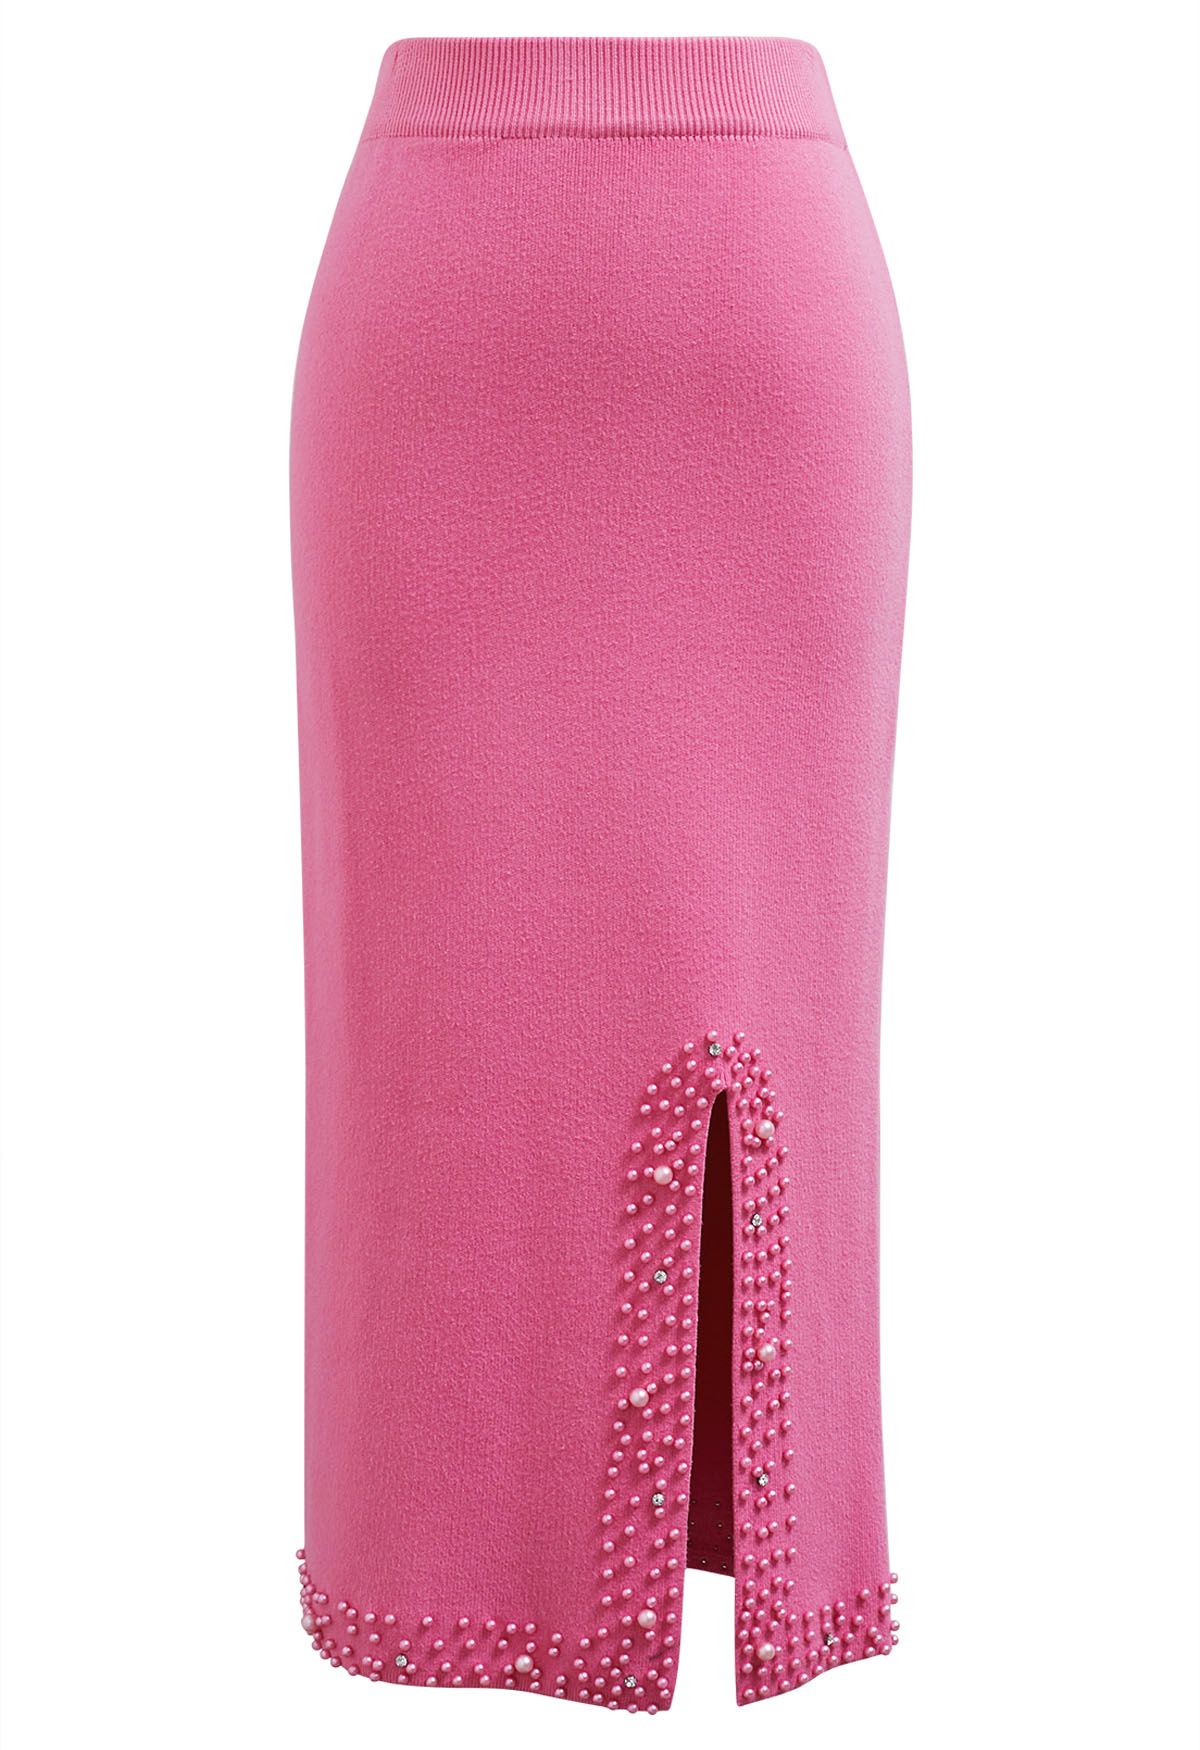 Pearl Embellished Slit Hem Knit Pencil Skirt in Hot Pink - Retro, Indie ...